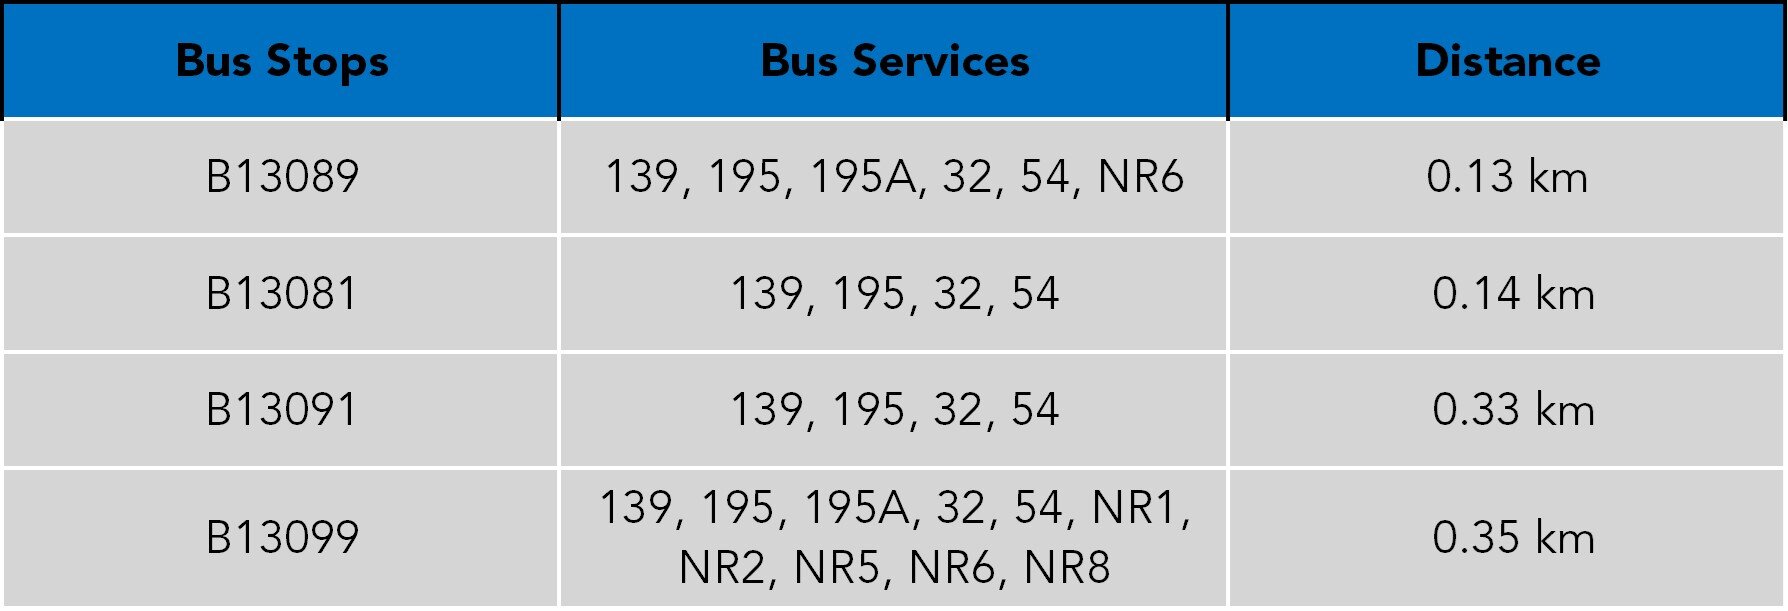 TheAvenir Buses Table.jpg